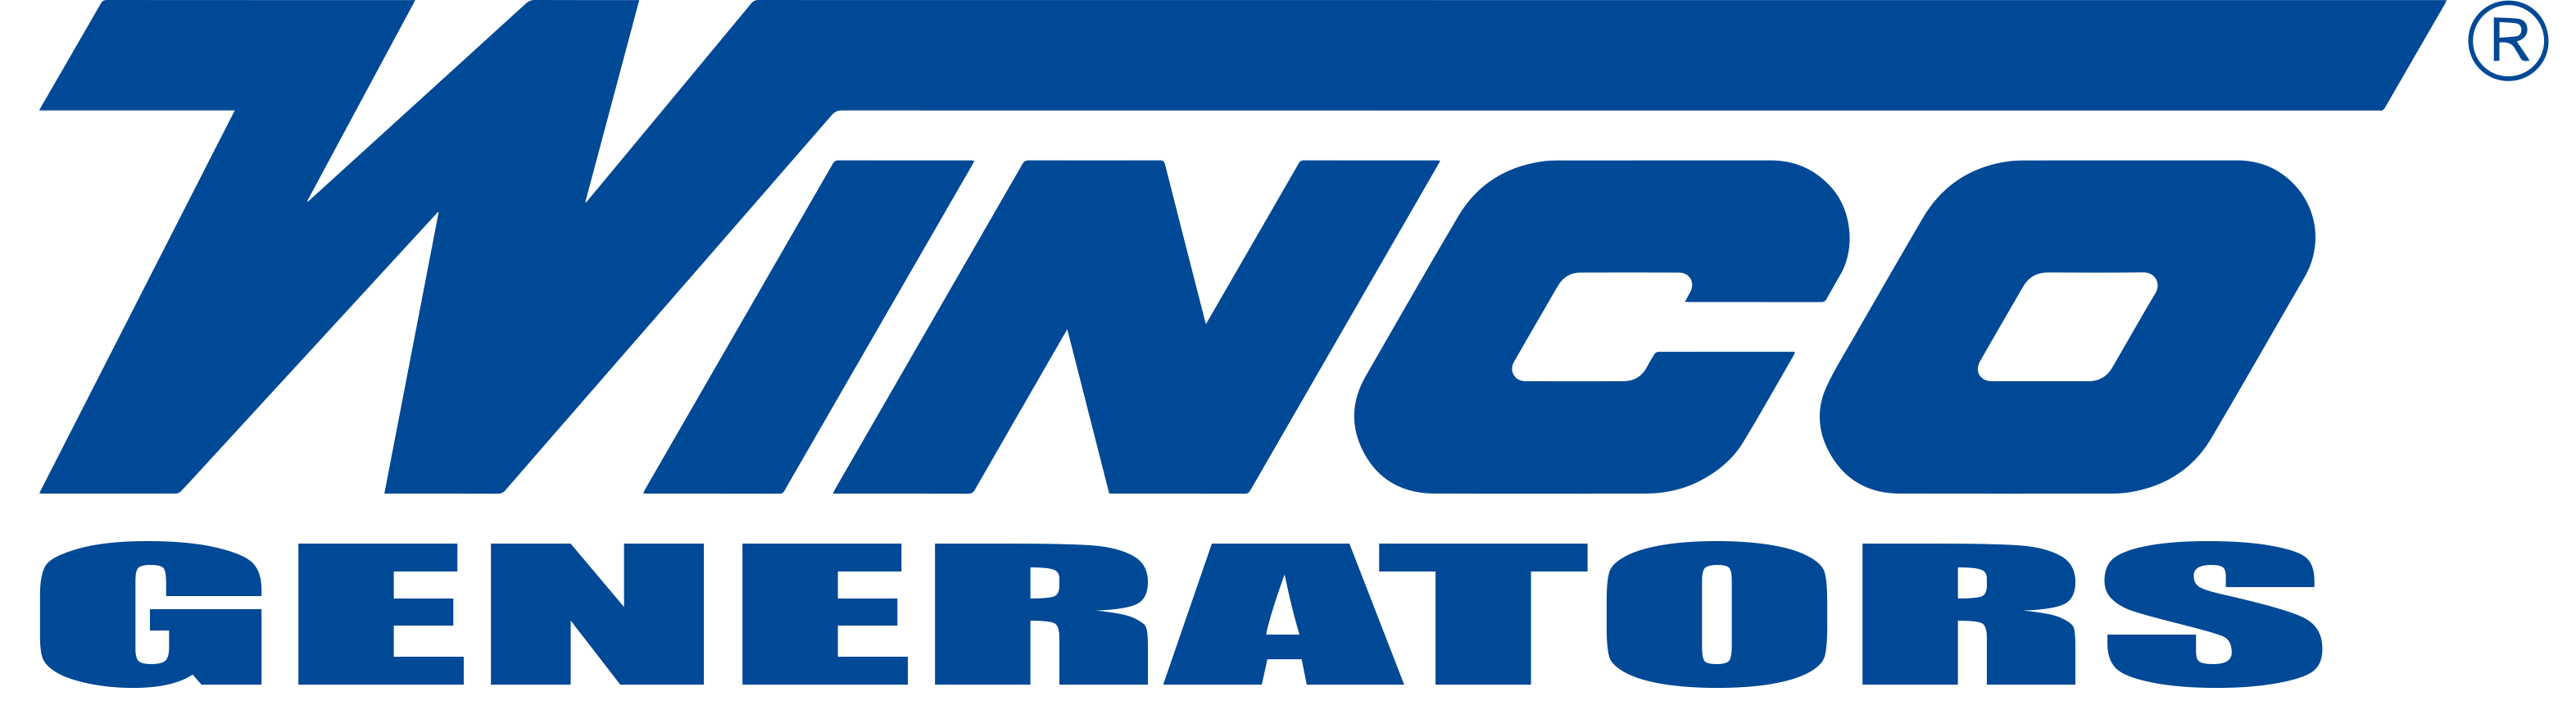 Winco Generators, logo, Northeast Generator, generators